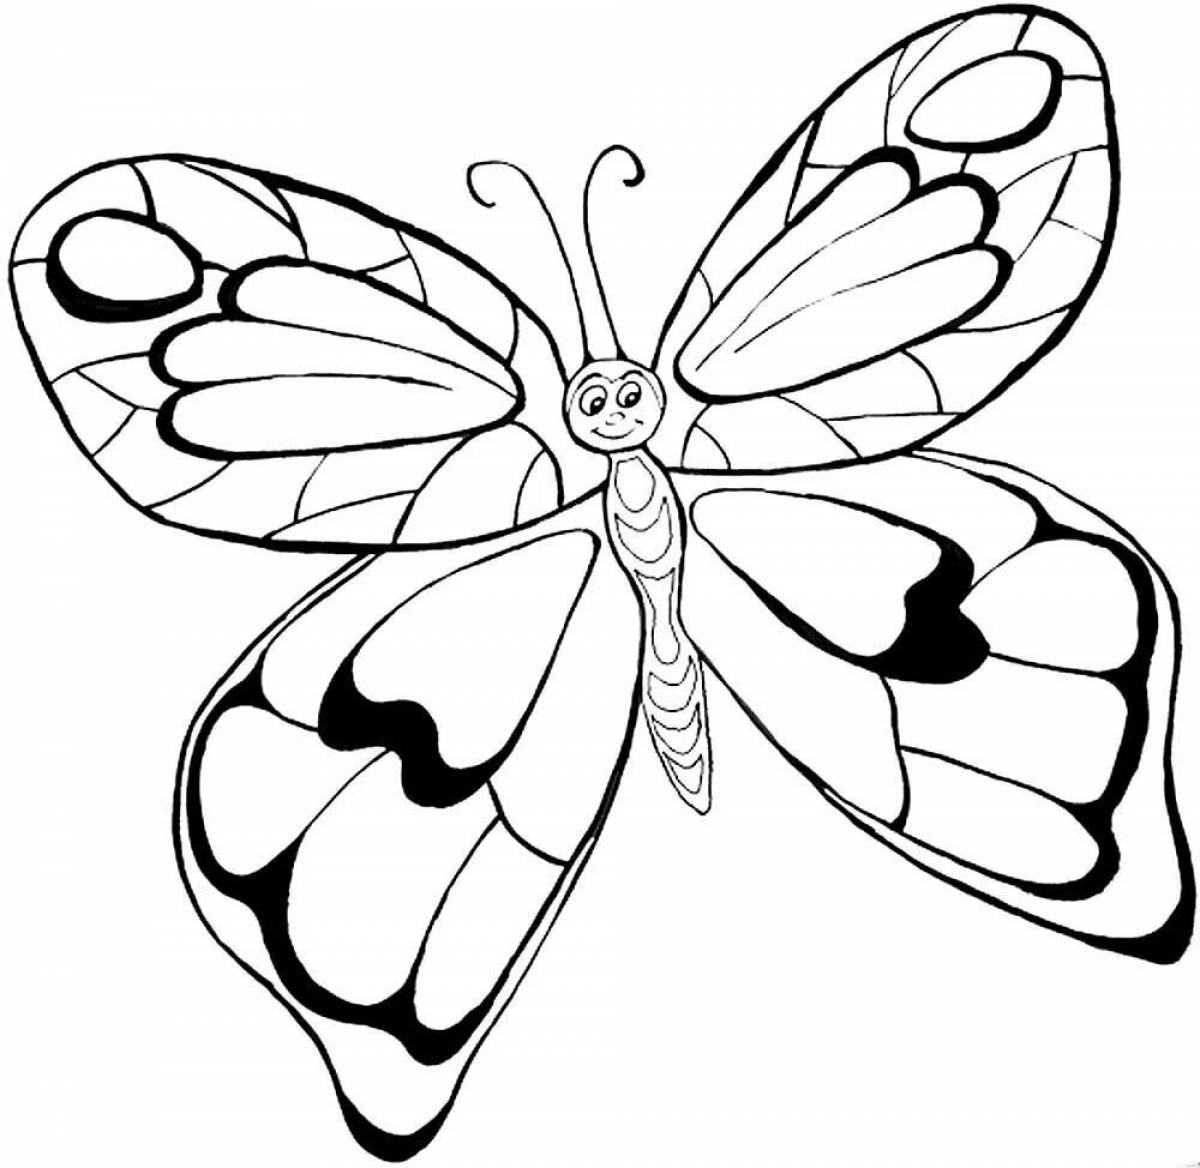 Волшебная детская бабочка-раскраска